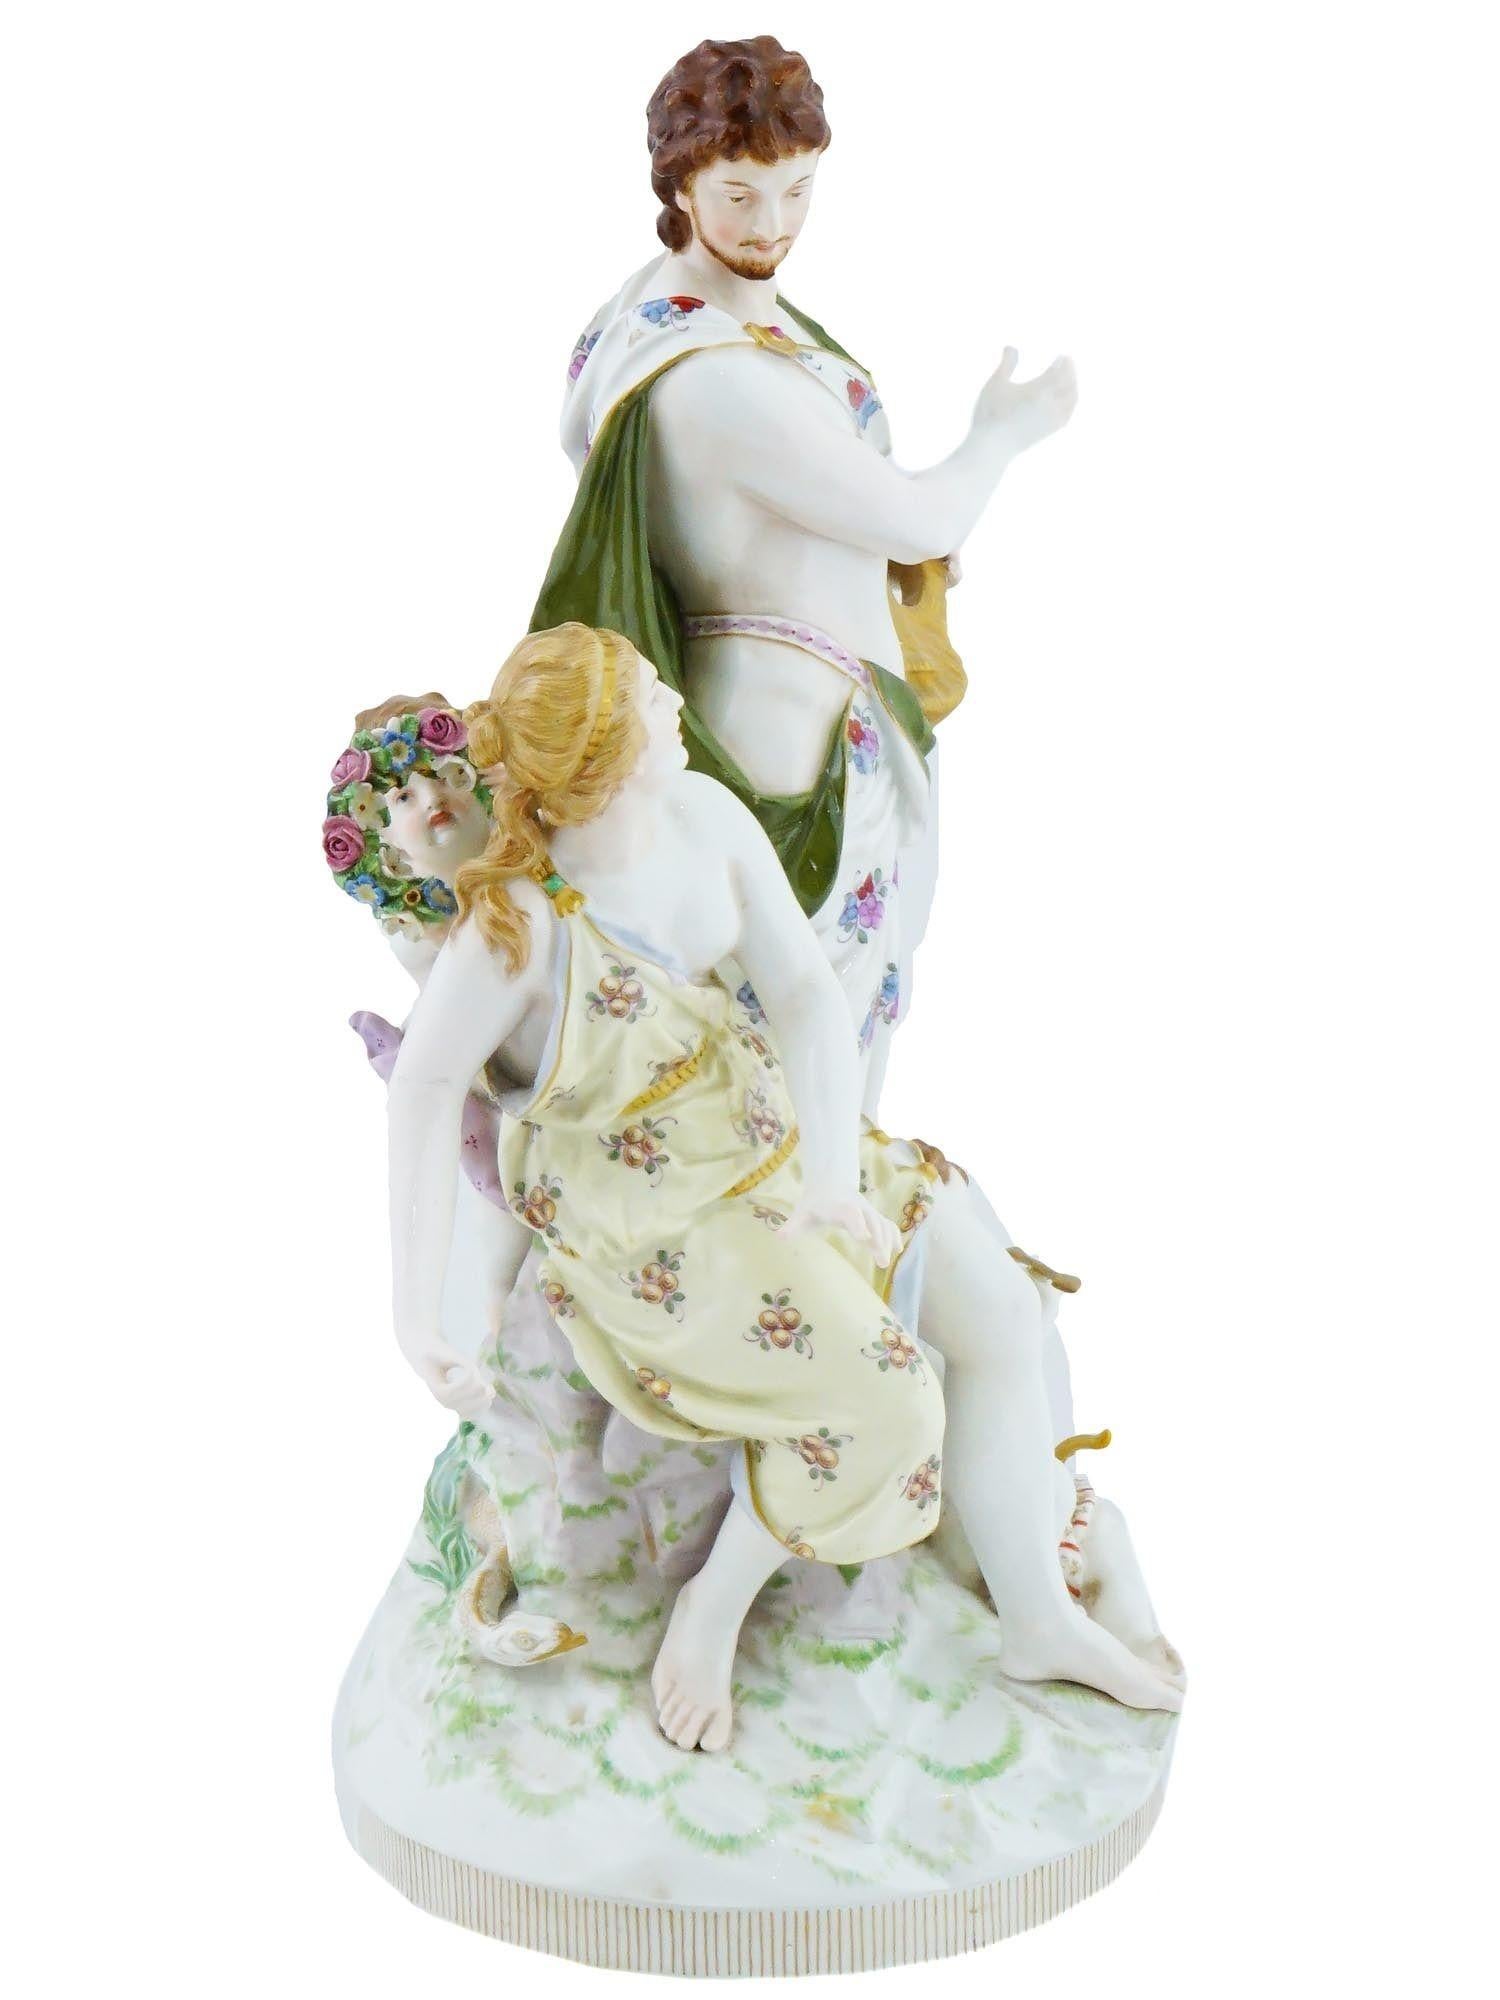 KPM Porcelain Figurine Depicting Orpheus and Eurydice For Sale 2